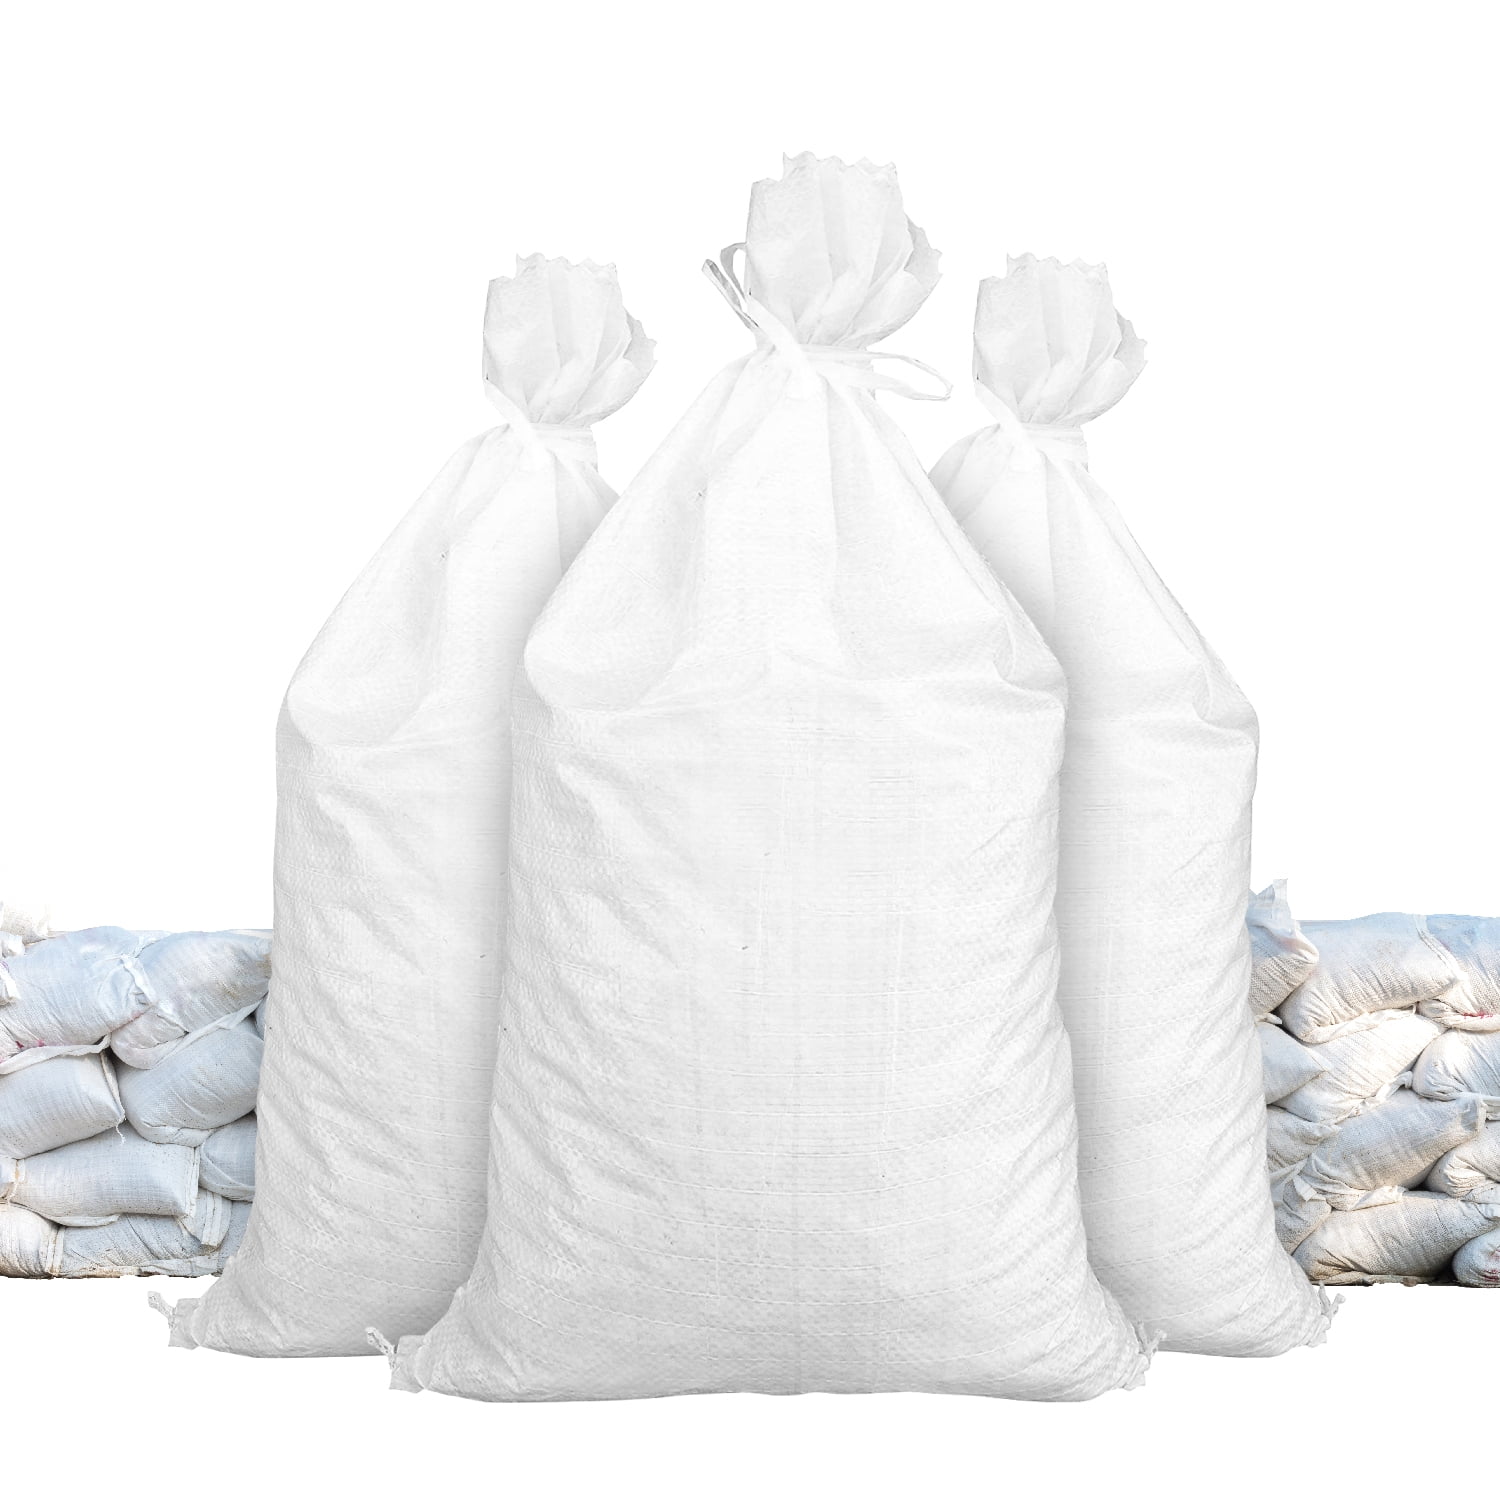 Flood Water Barrier Water Curb Store Bags w/Ties Polypropylene Black 20-Pack Tent Sandbags Sandbags for Flooding,Sand Bag 